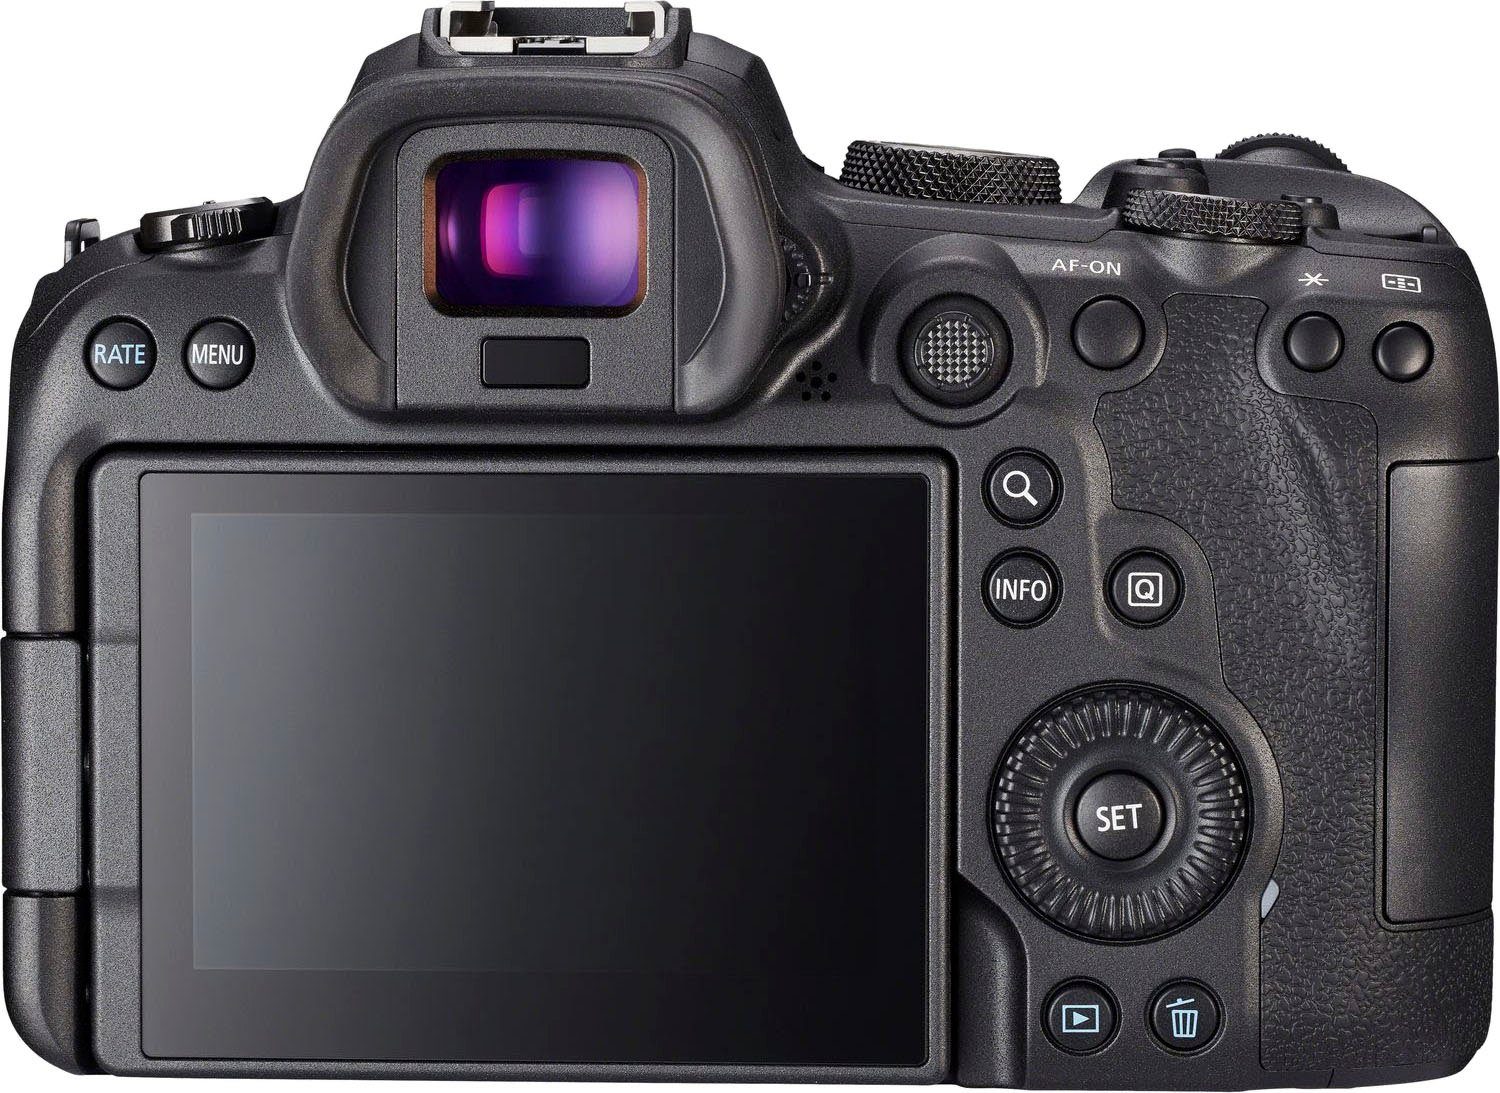 Canon EOS R6 Gehäuse + IS 24-105mm (RF RF Systemkamera F4-7.1 20,1 WLAN MP, 24-105mm IS STM, STM (WiFi) Bluetooth, F4-7.1